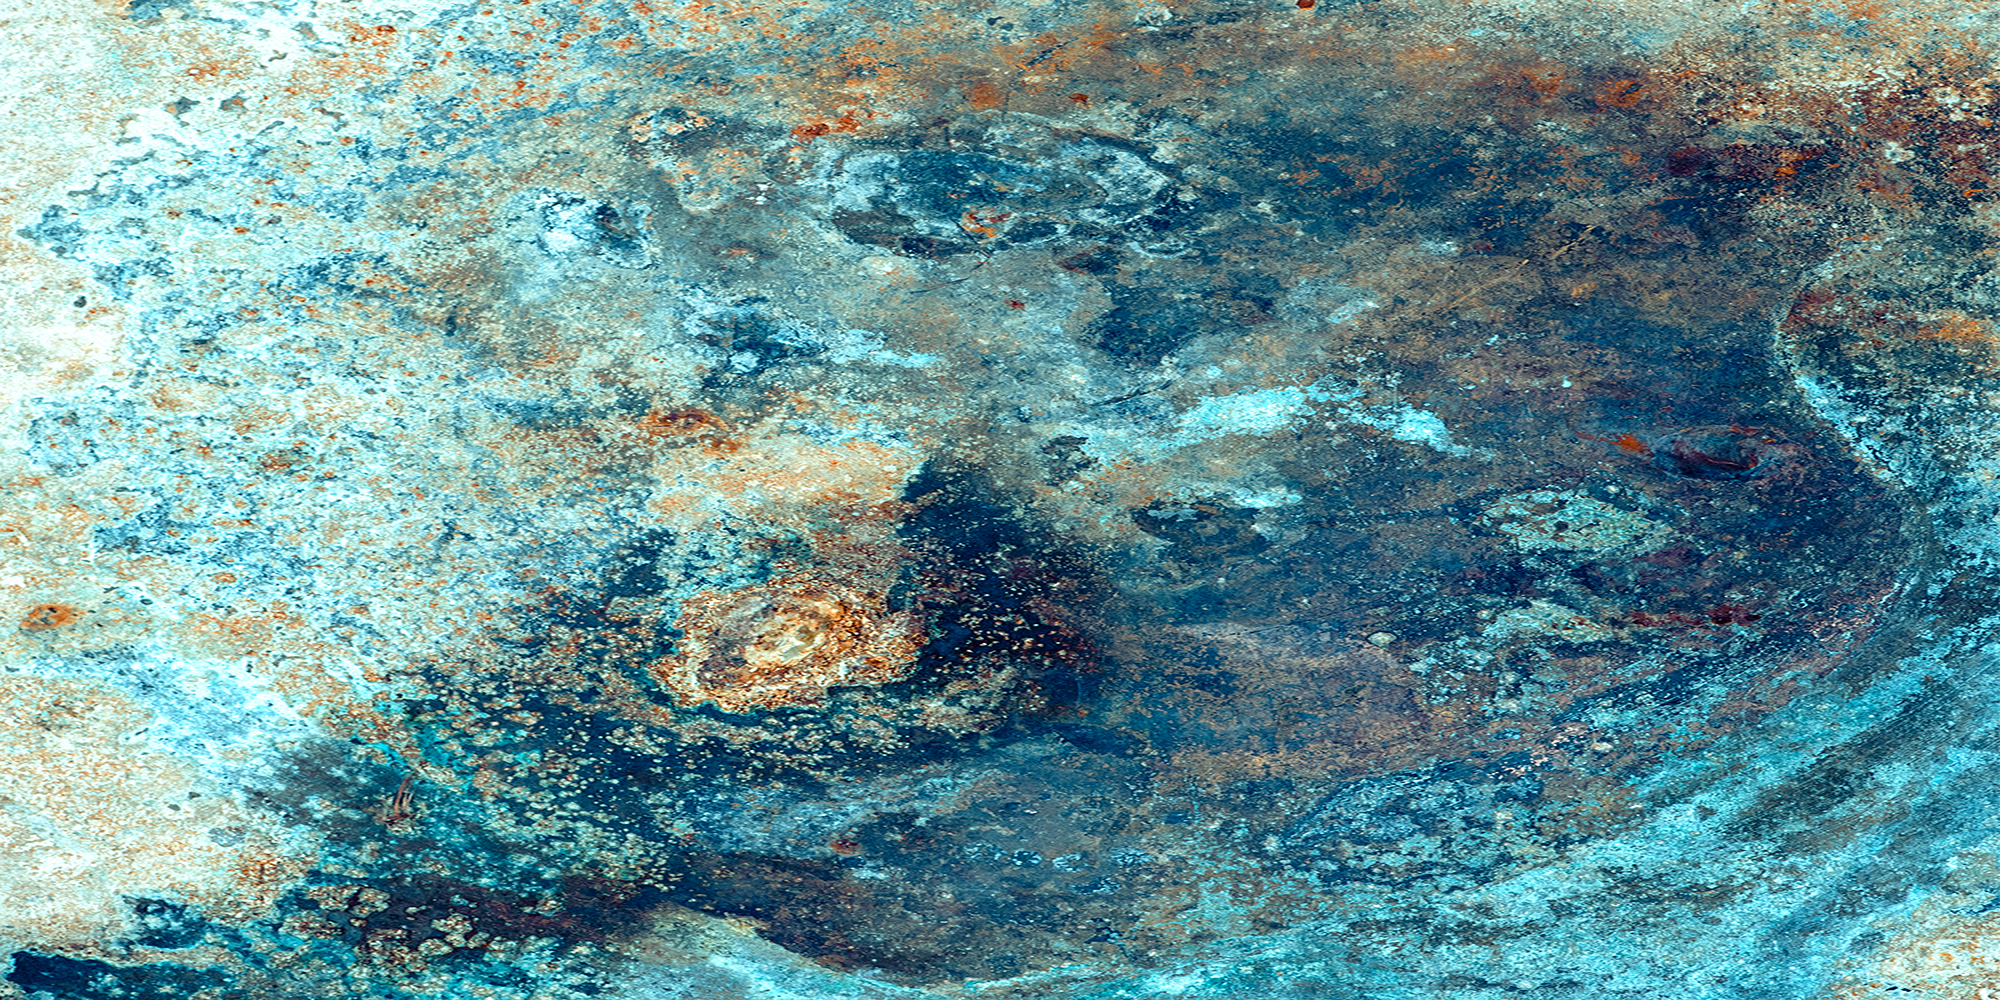 Aged Copper rust pateina